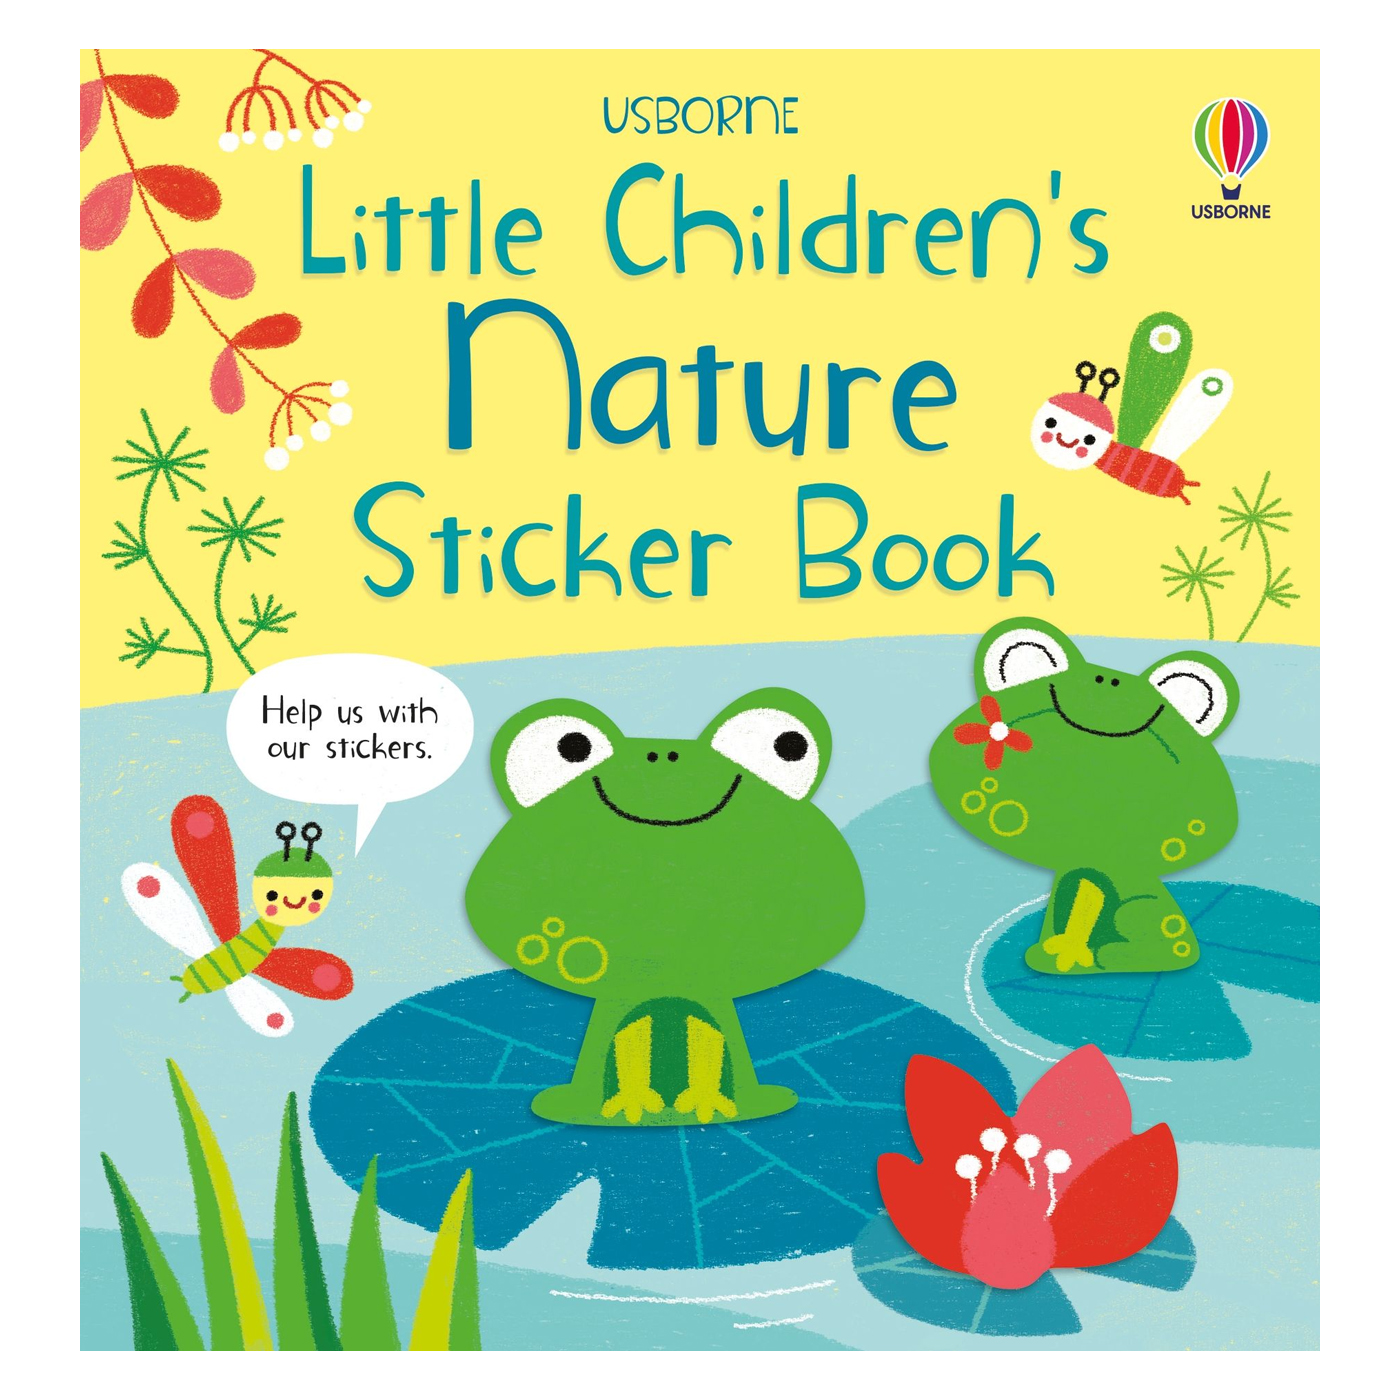  Little Children's Nature Sticker Book